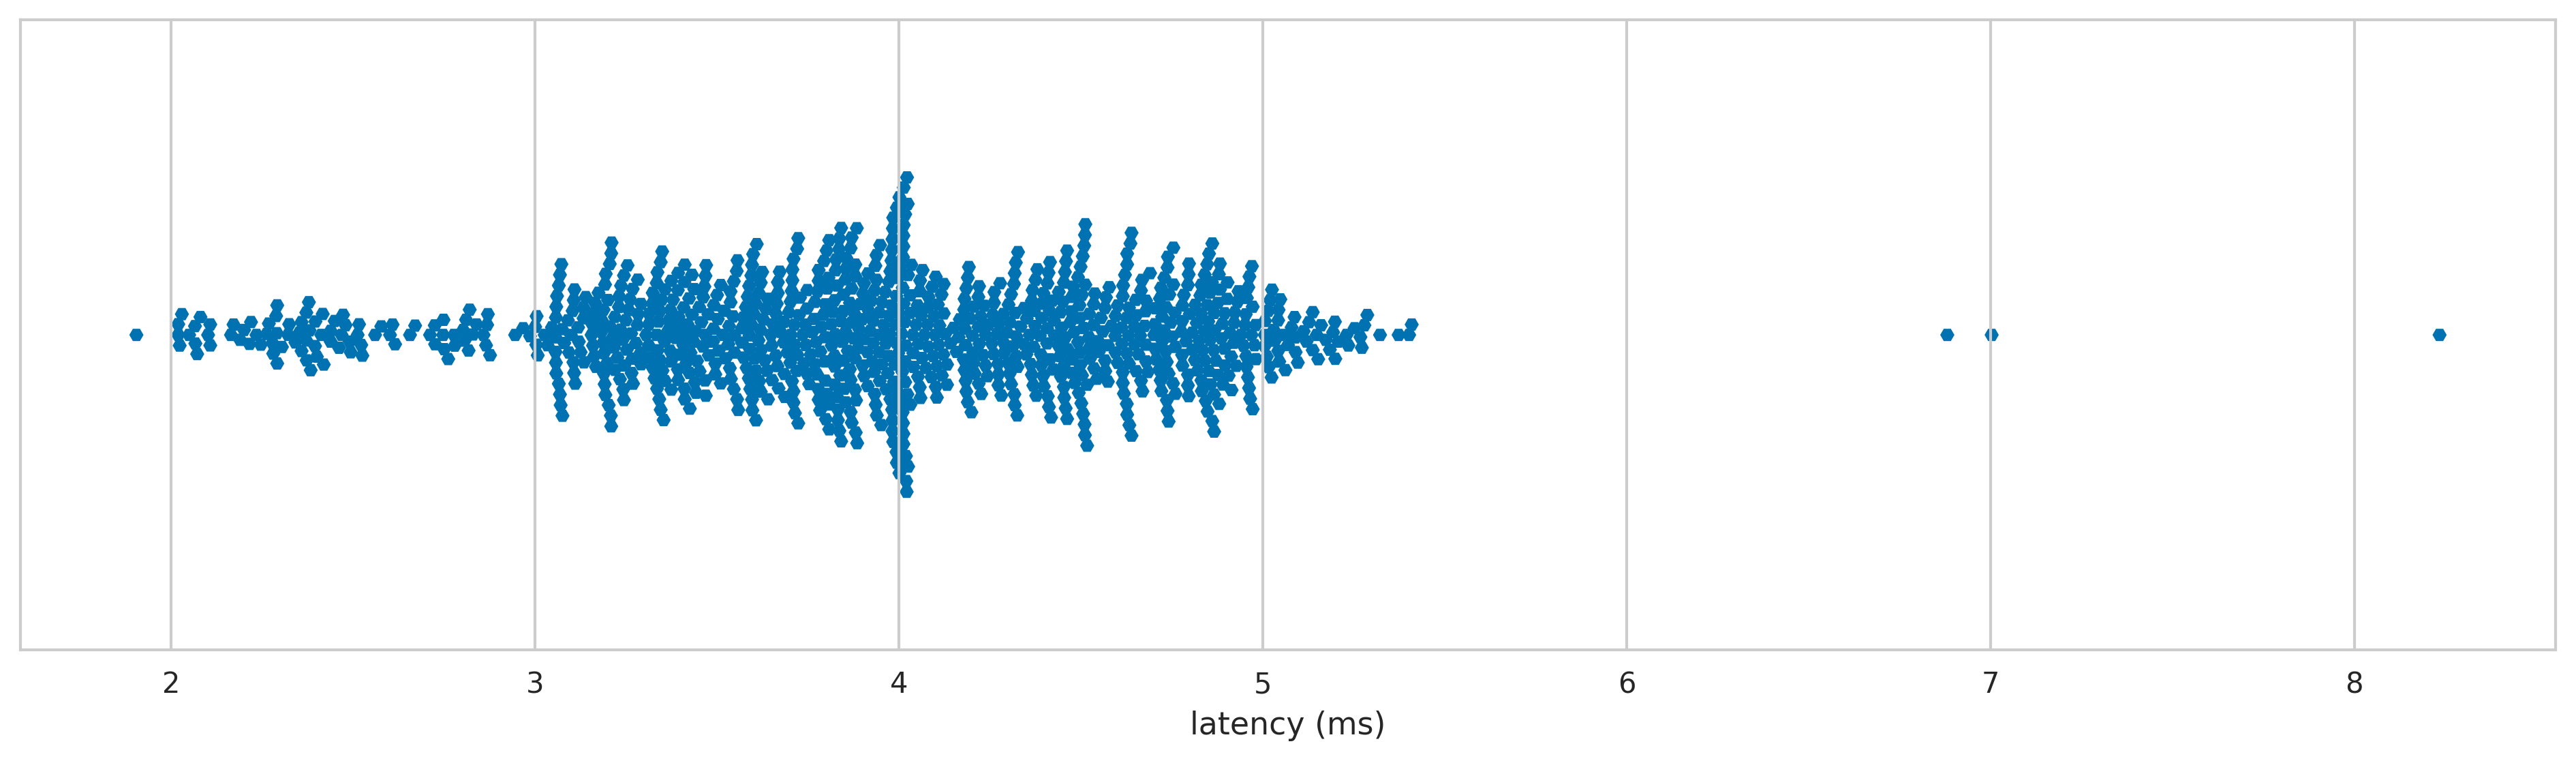 Logitech G300 latency distribution 